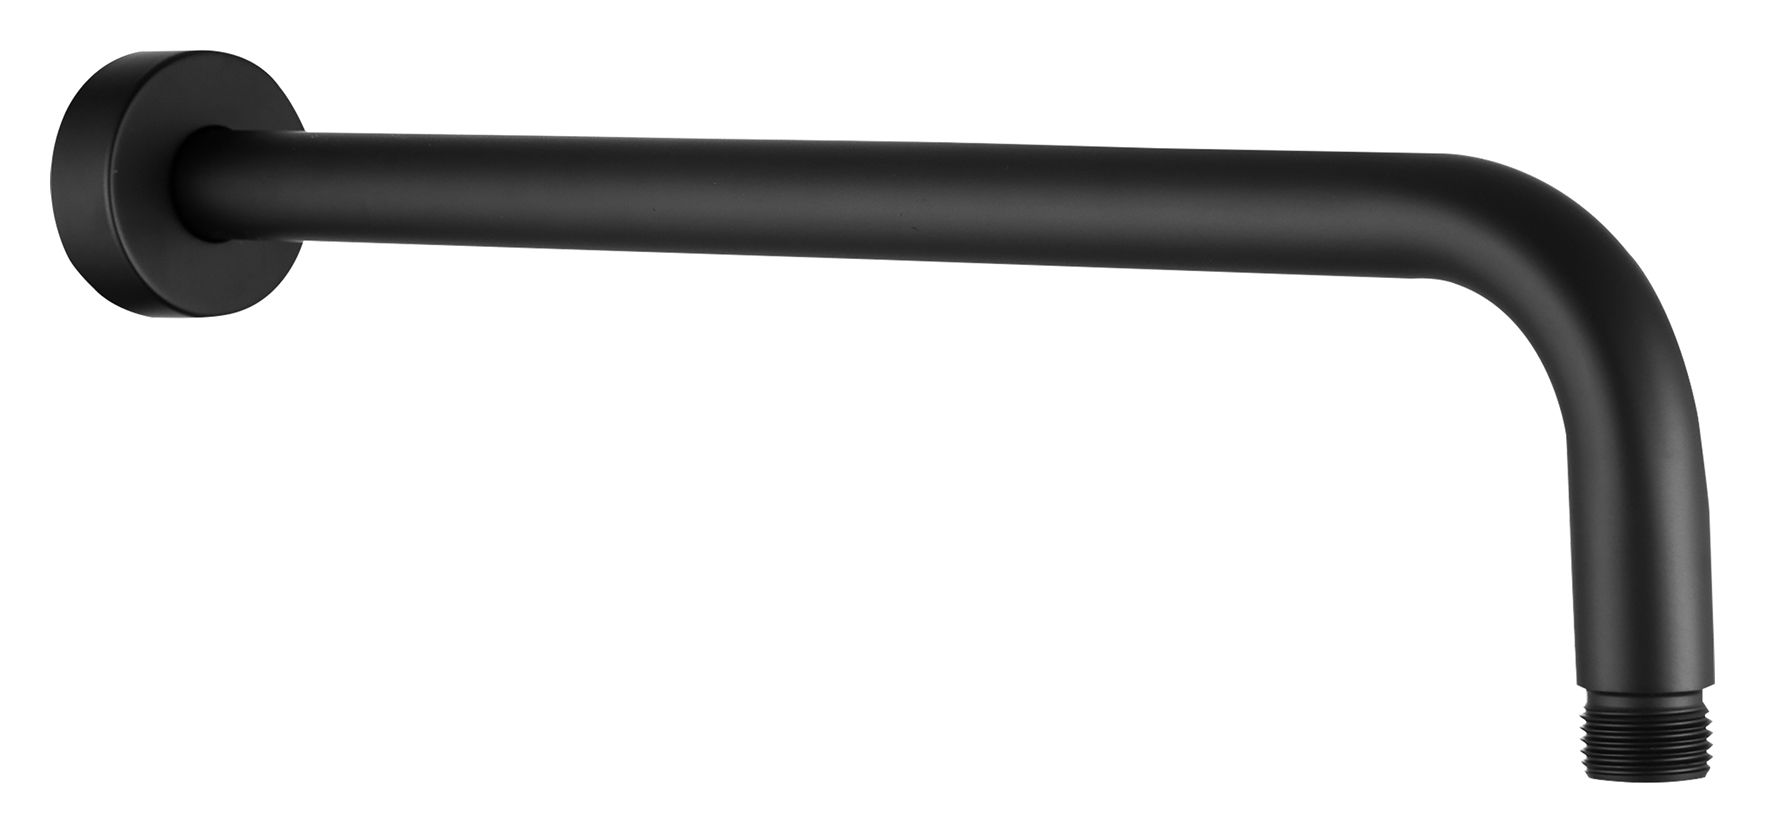 Bristan Round Wall Mounted Black Shower Arm - 370mm